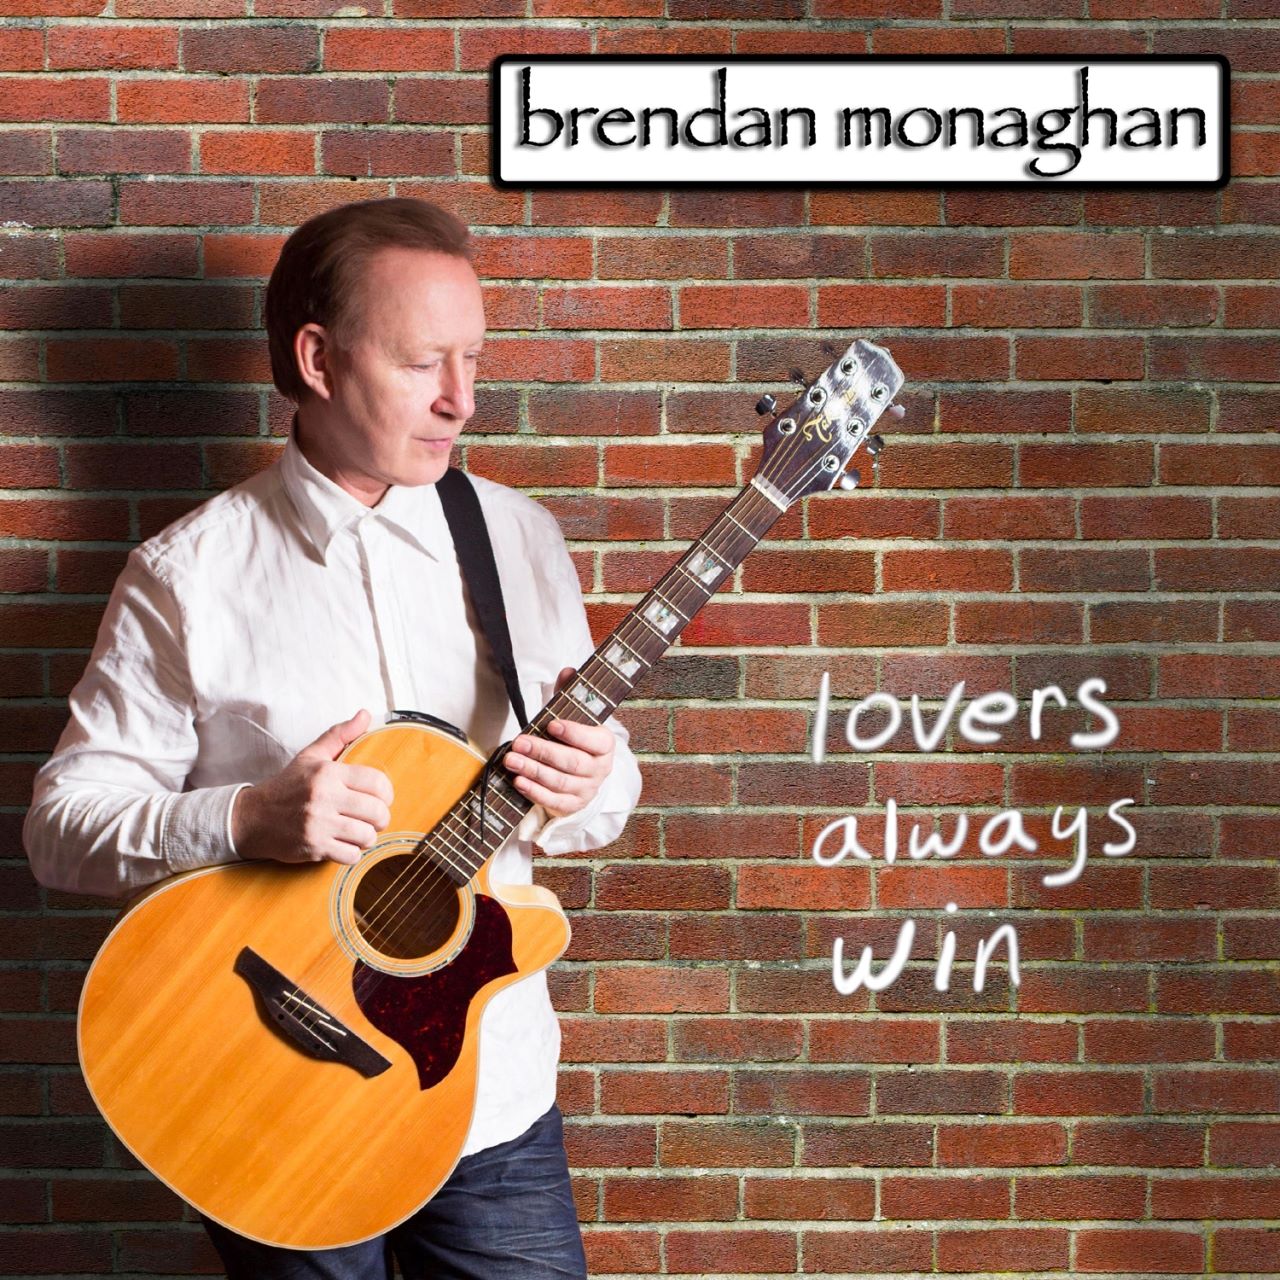 Brendan Monaghan - Lovers Always Win cover album